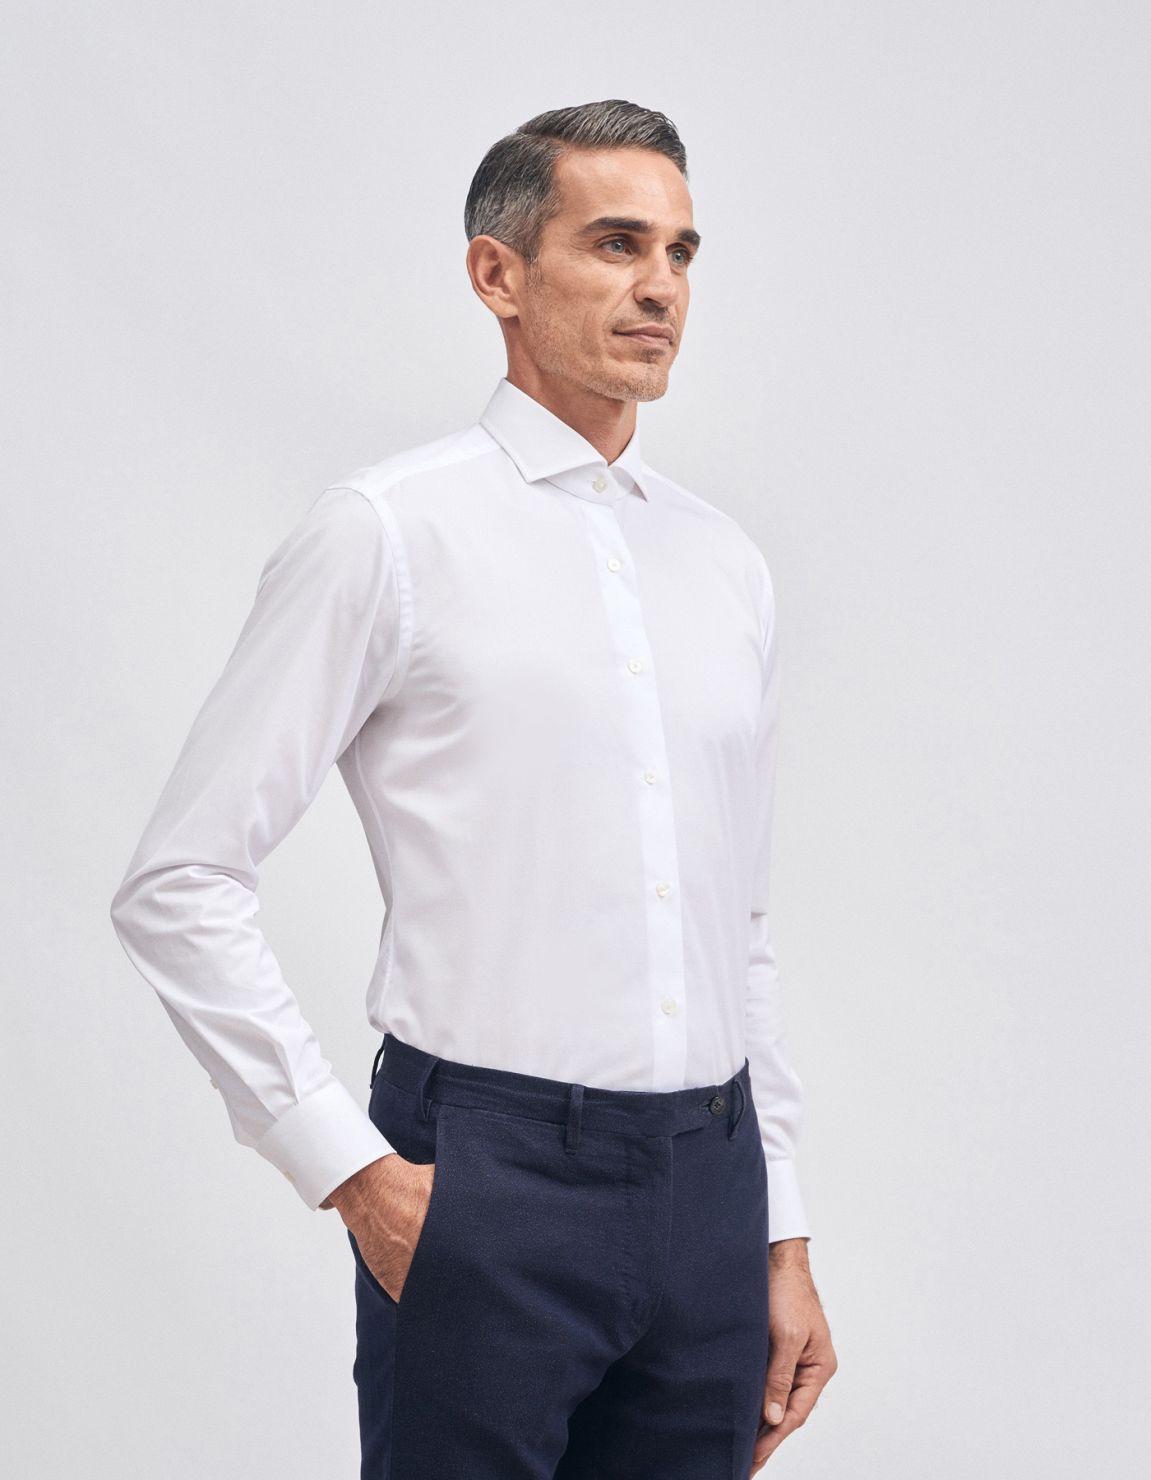 Shirt Collar cutaway White Twill Slim Fit 1